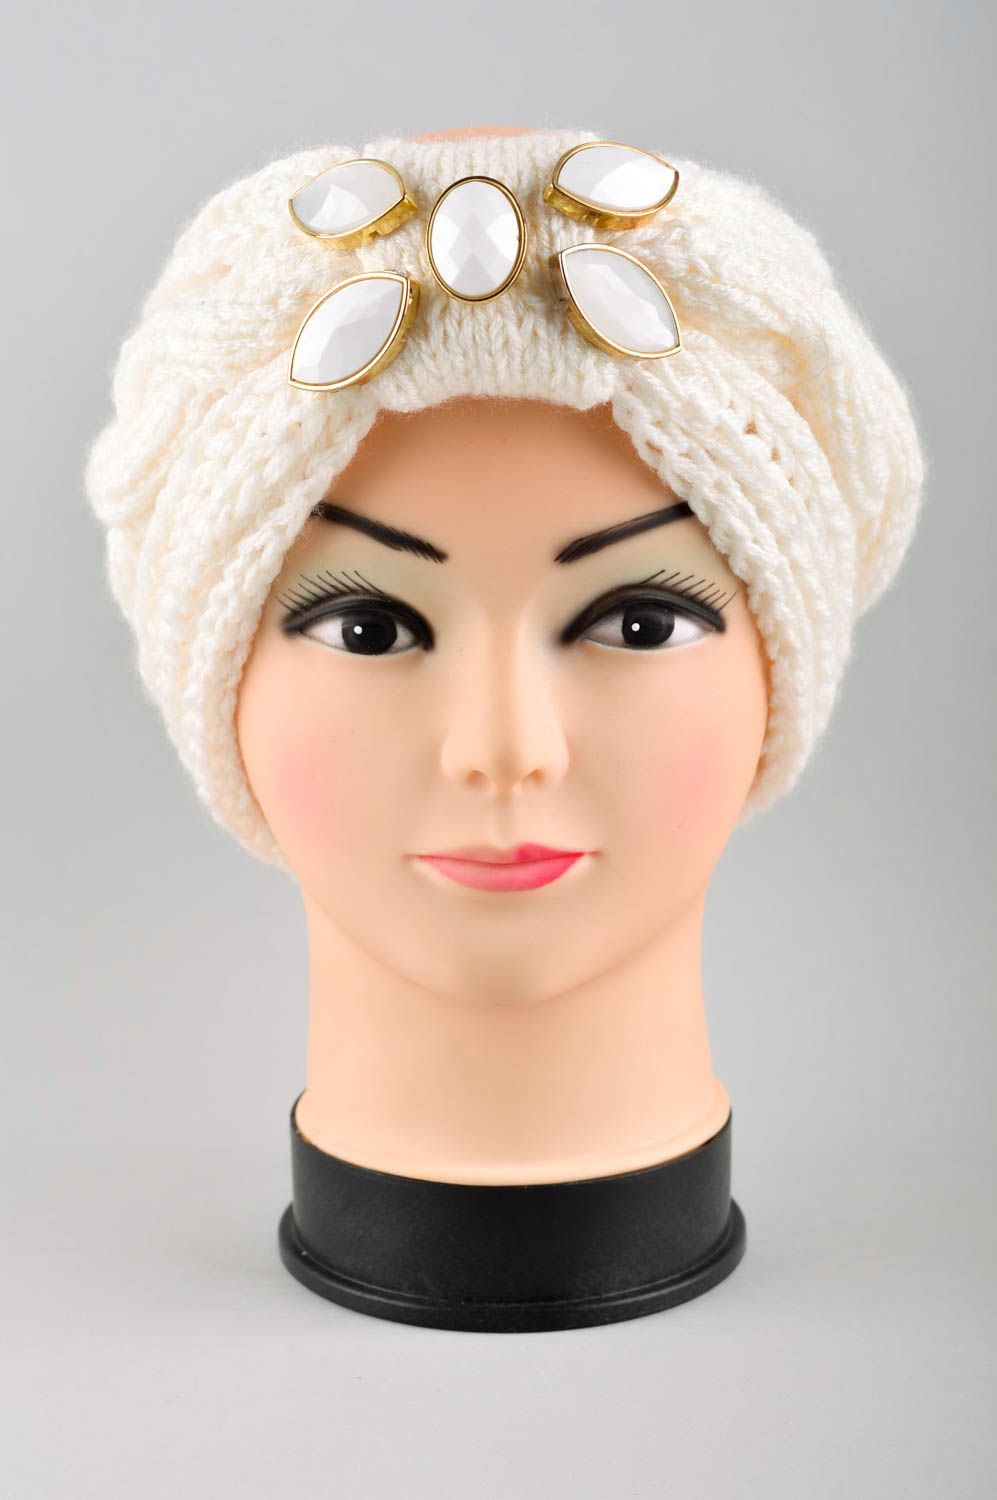 Handmade festive headband knitted stylish turban accessory in Eastern style photo 2